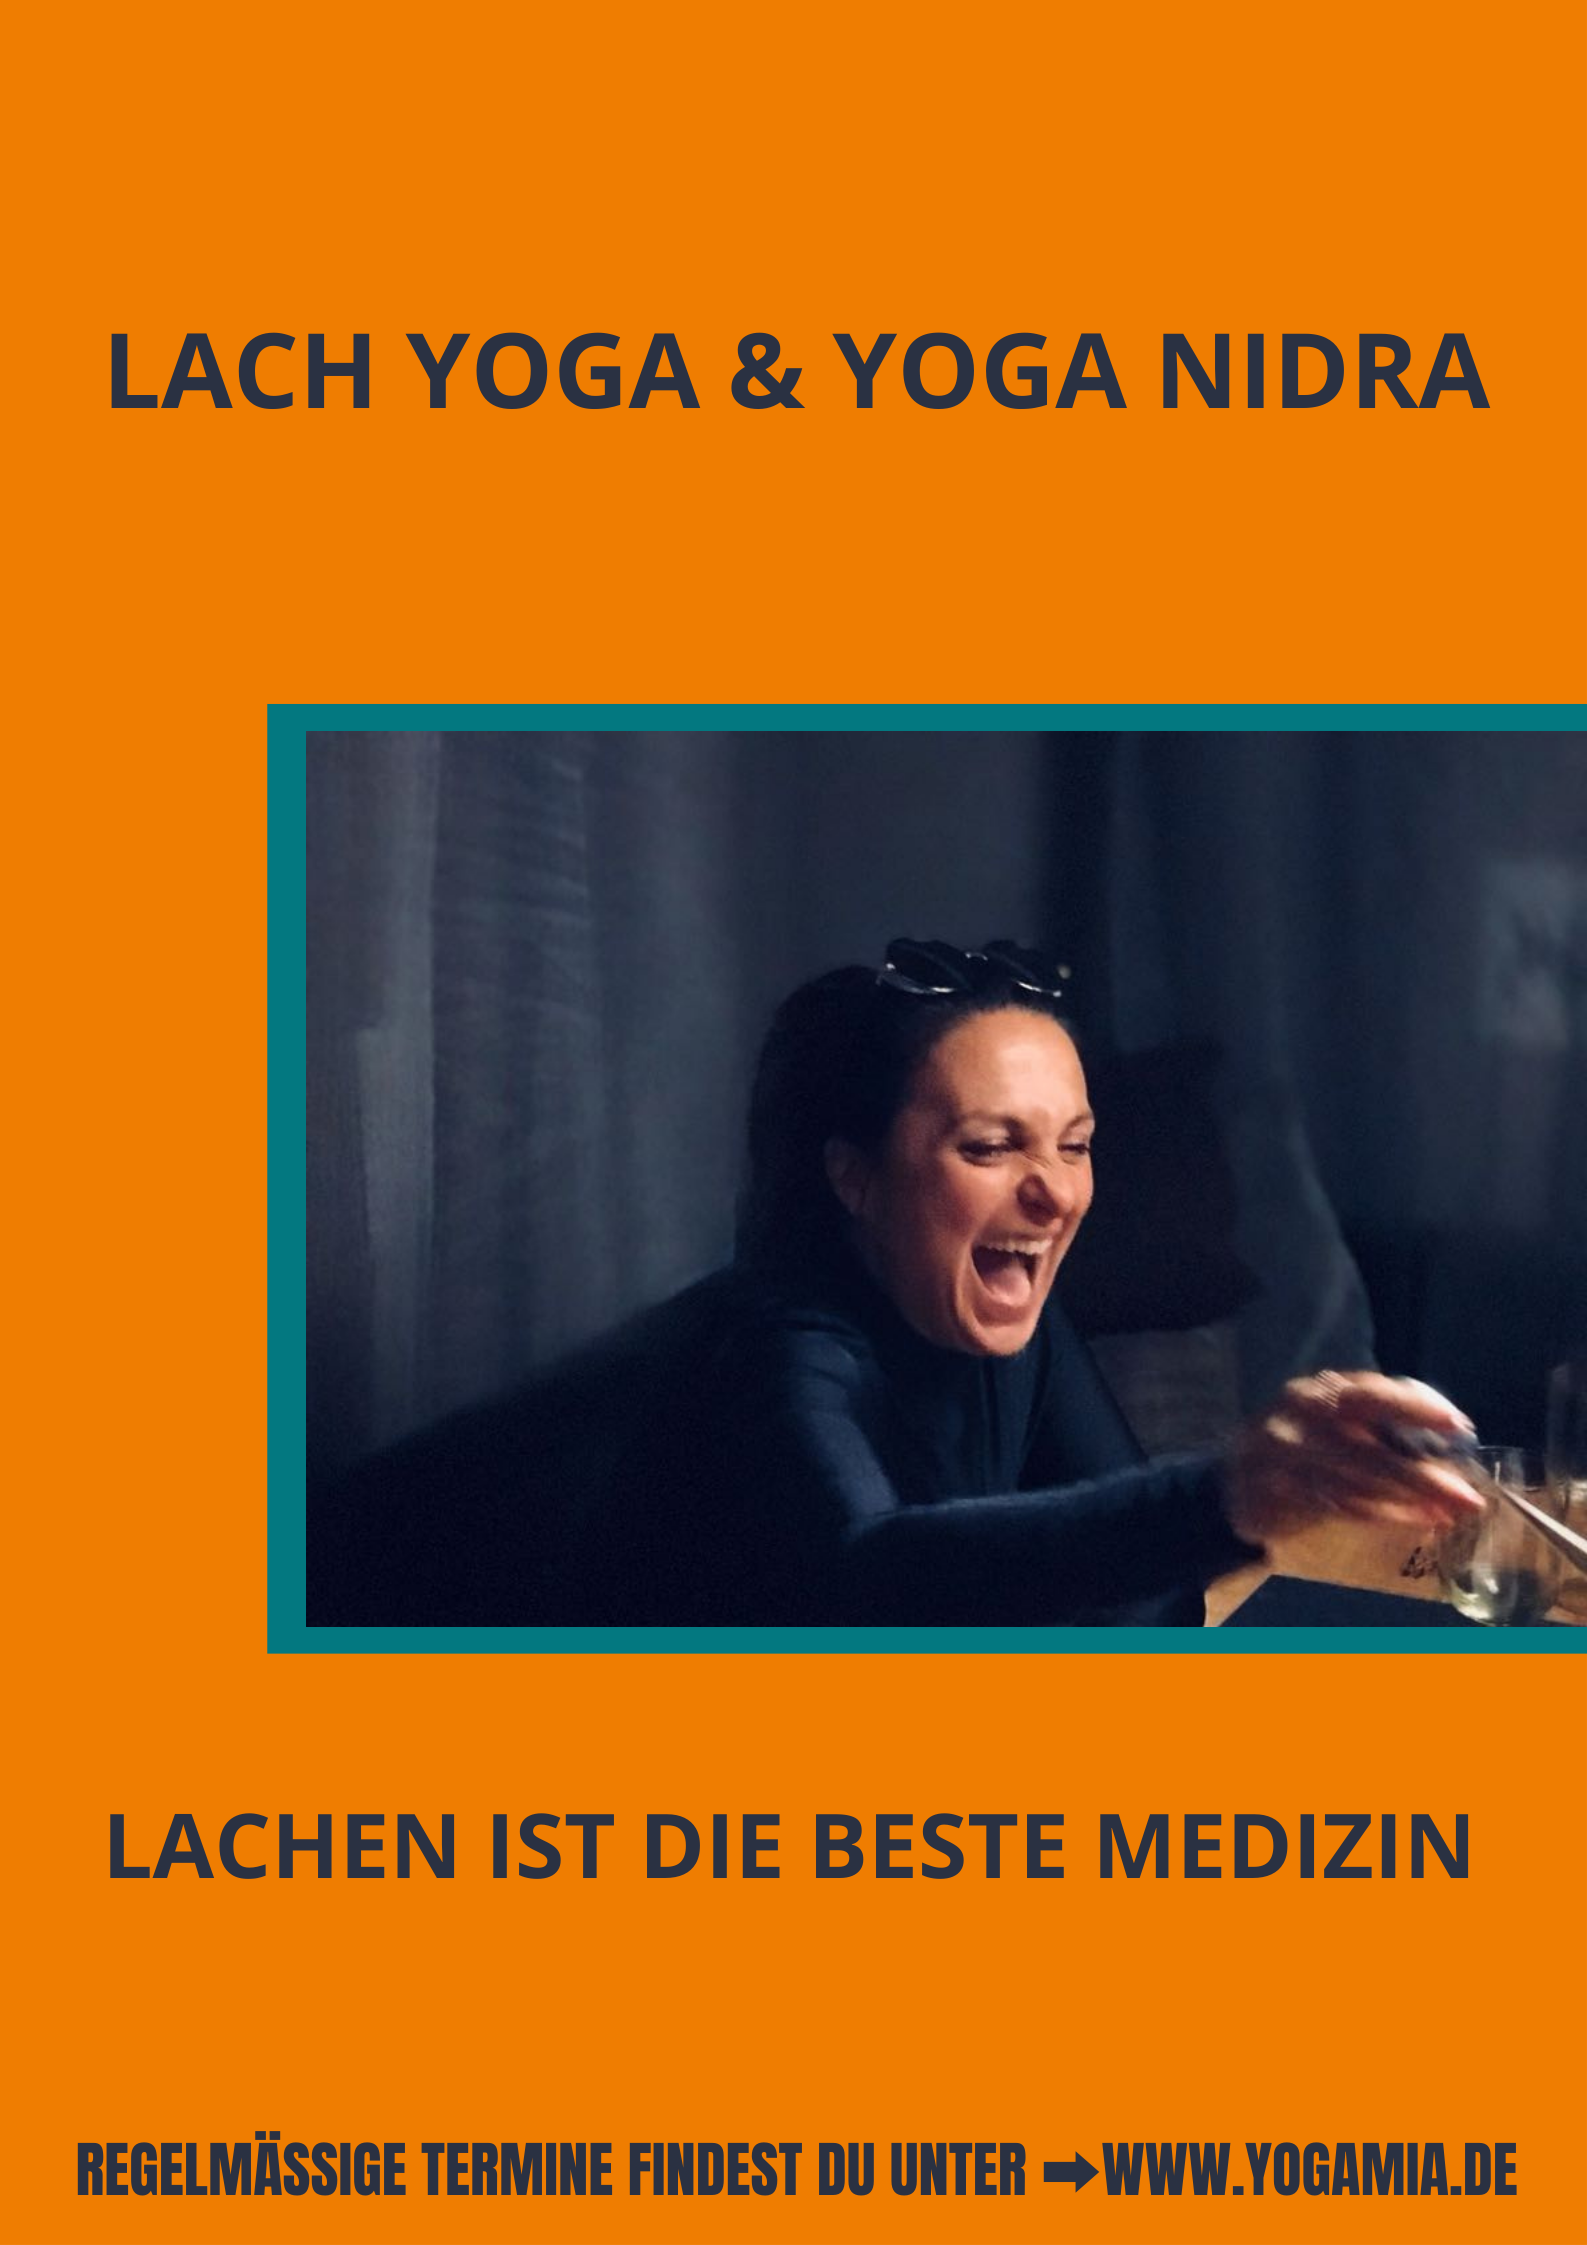 Online LachYoga & Yoga Nidra am Rosenmontag mit Cher